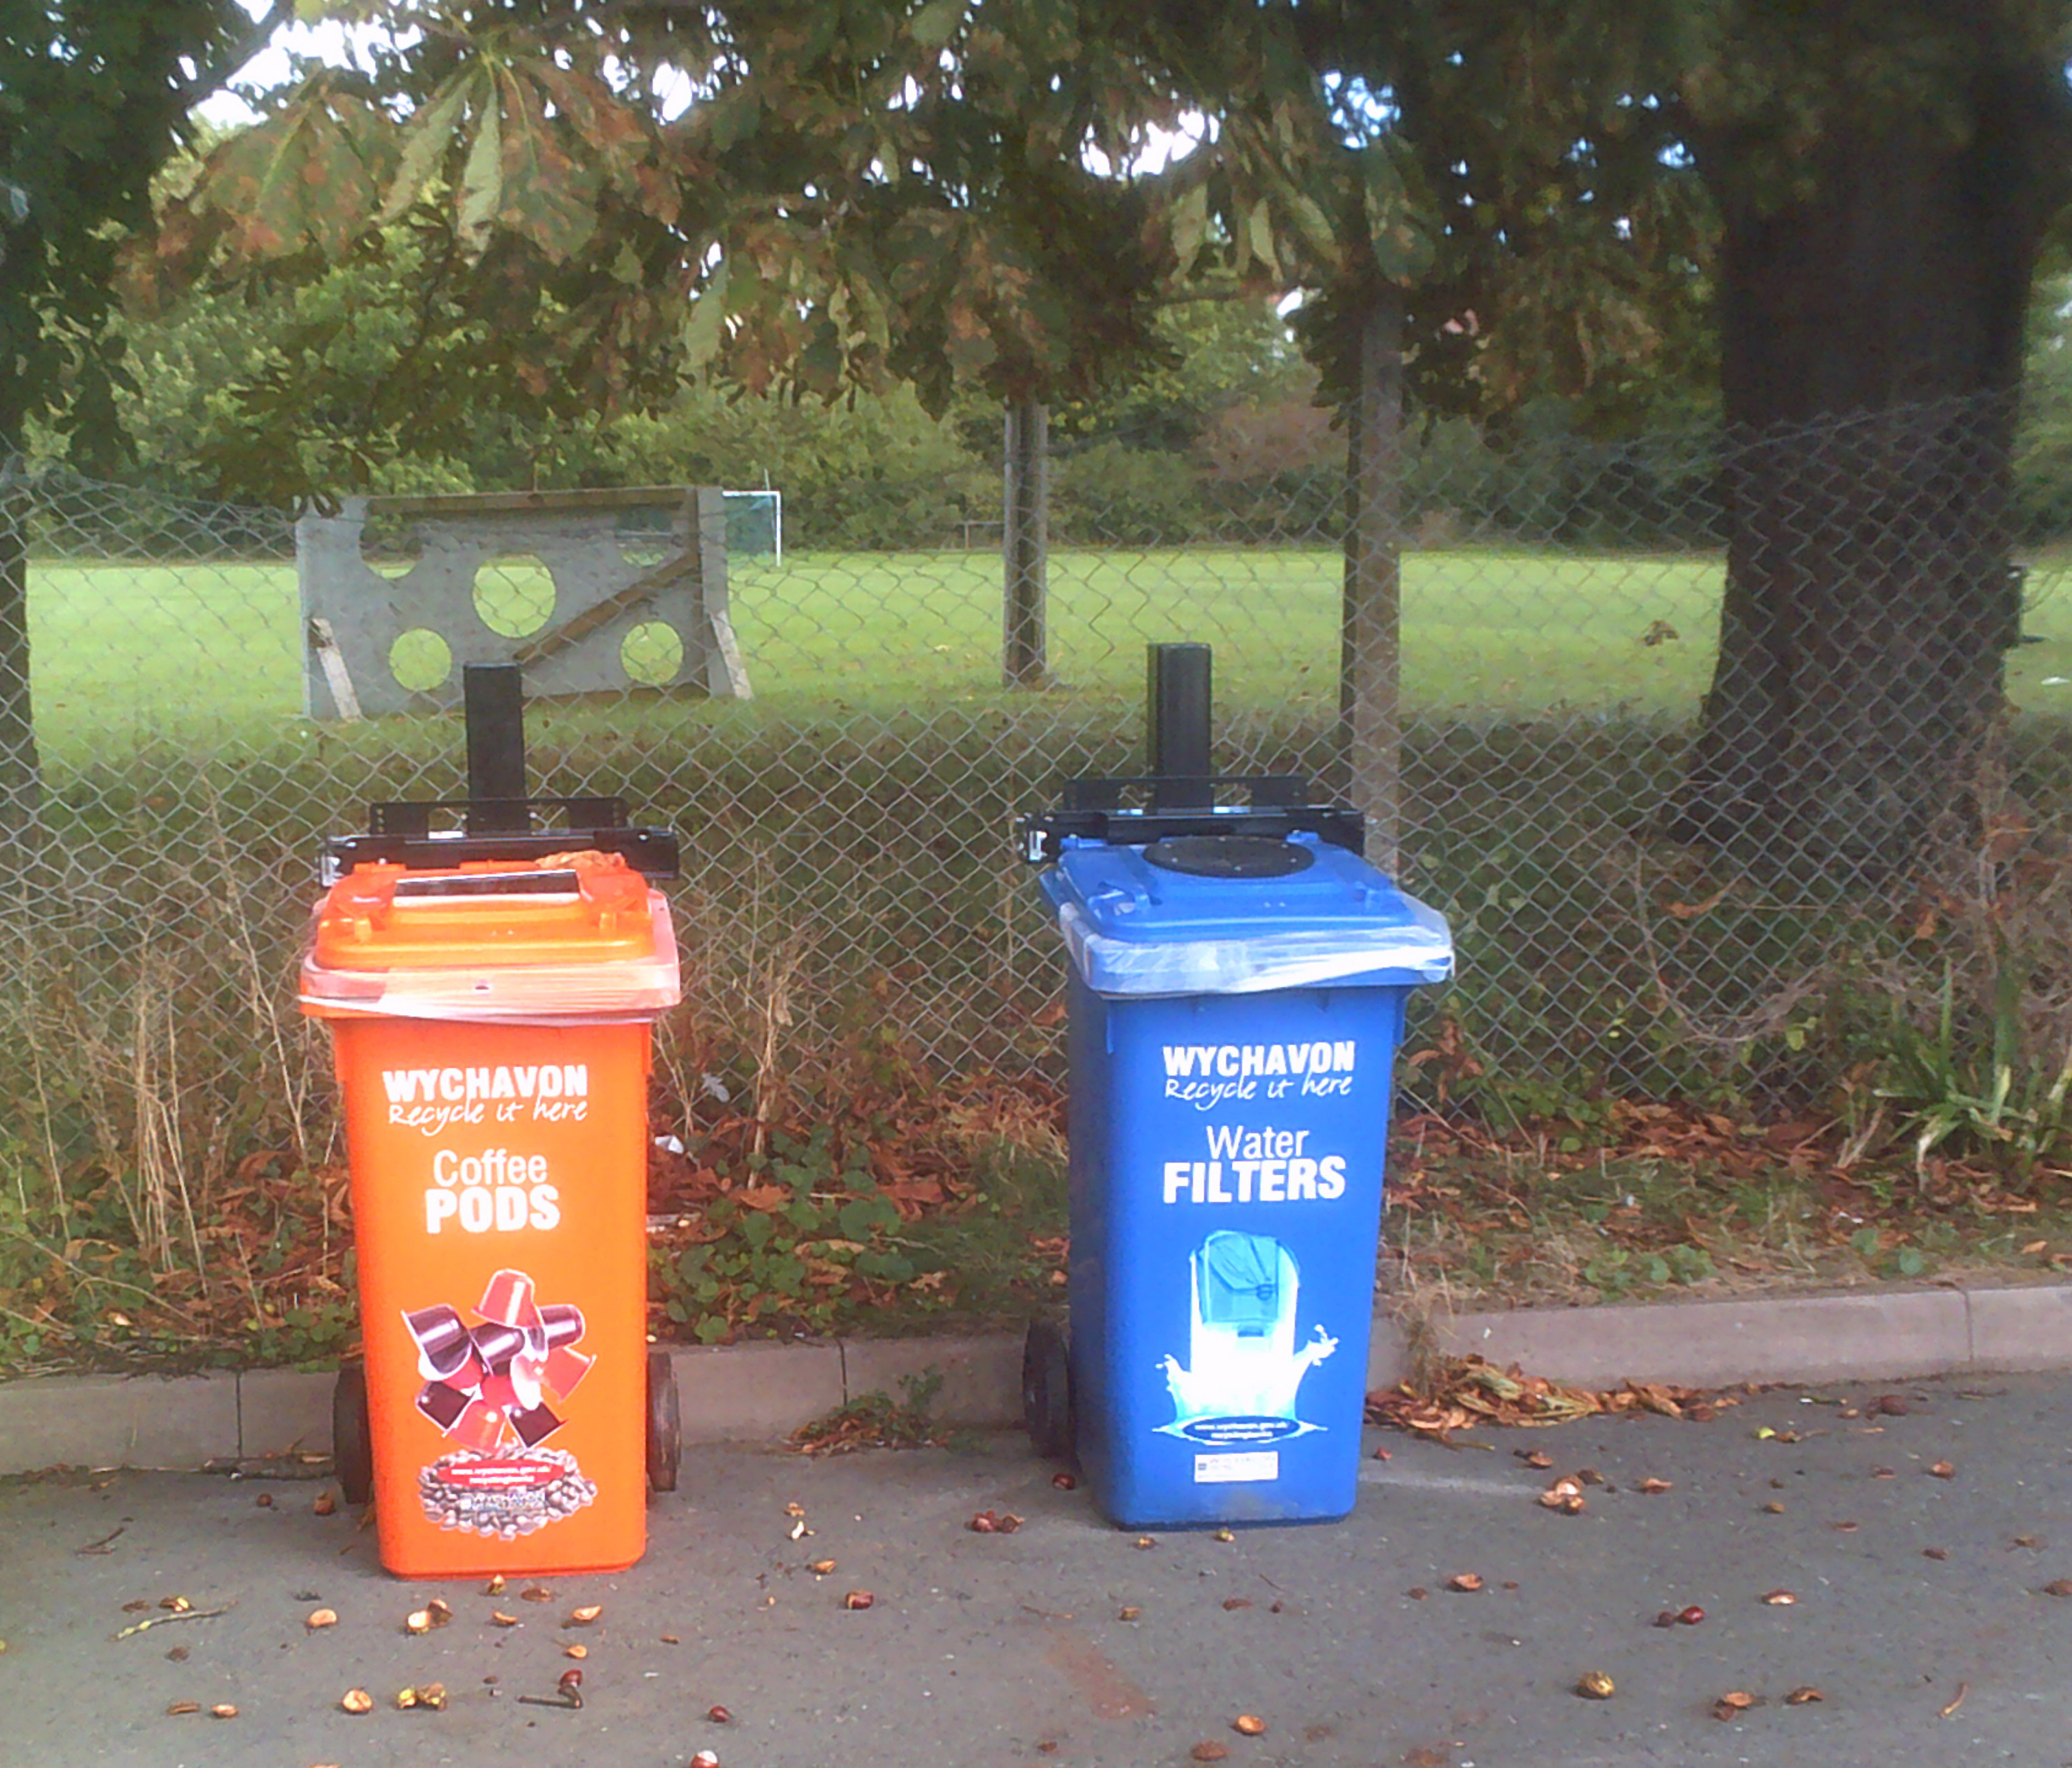 Extra recycling bins